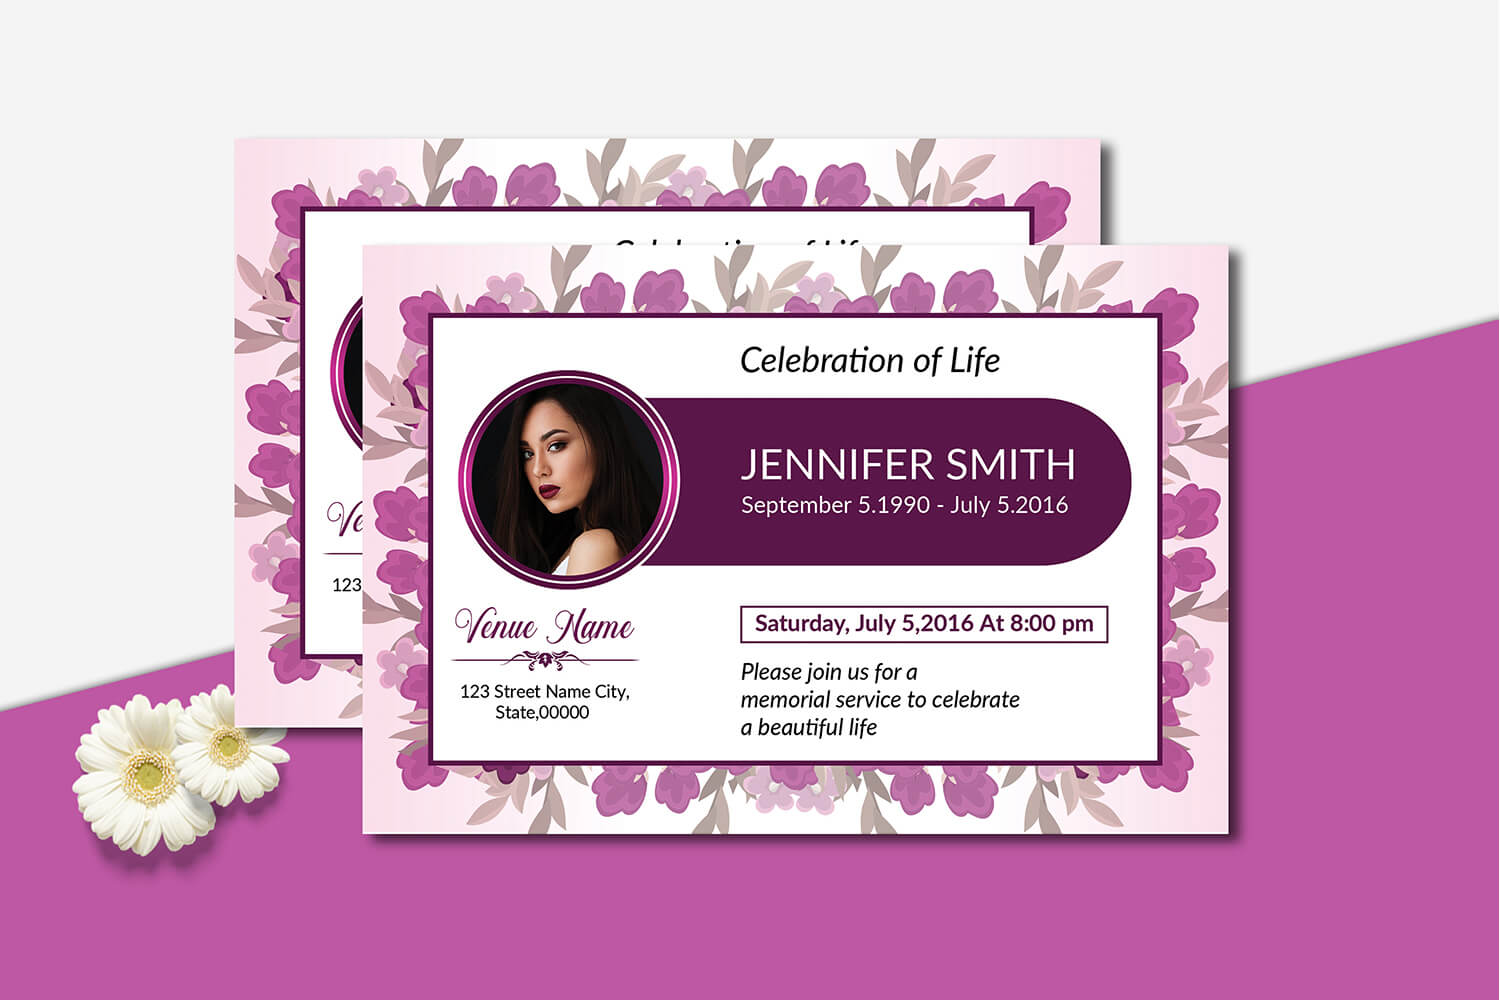 Funeral Announcement Invitation Card Template Pertaining To Funeral Invitation Card Template